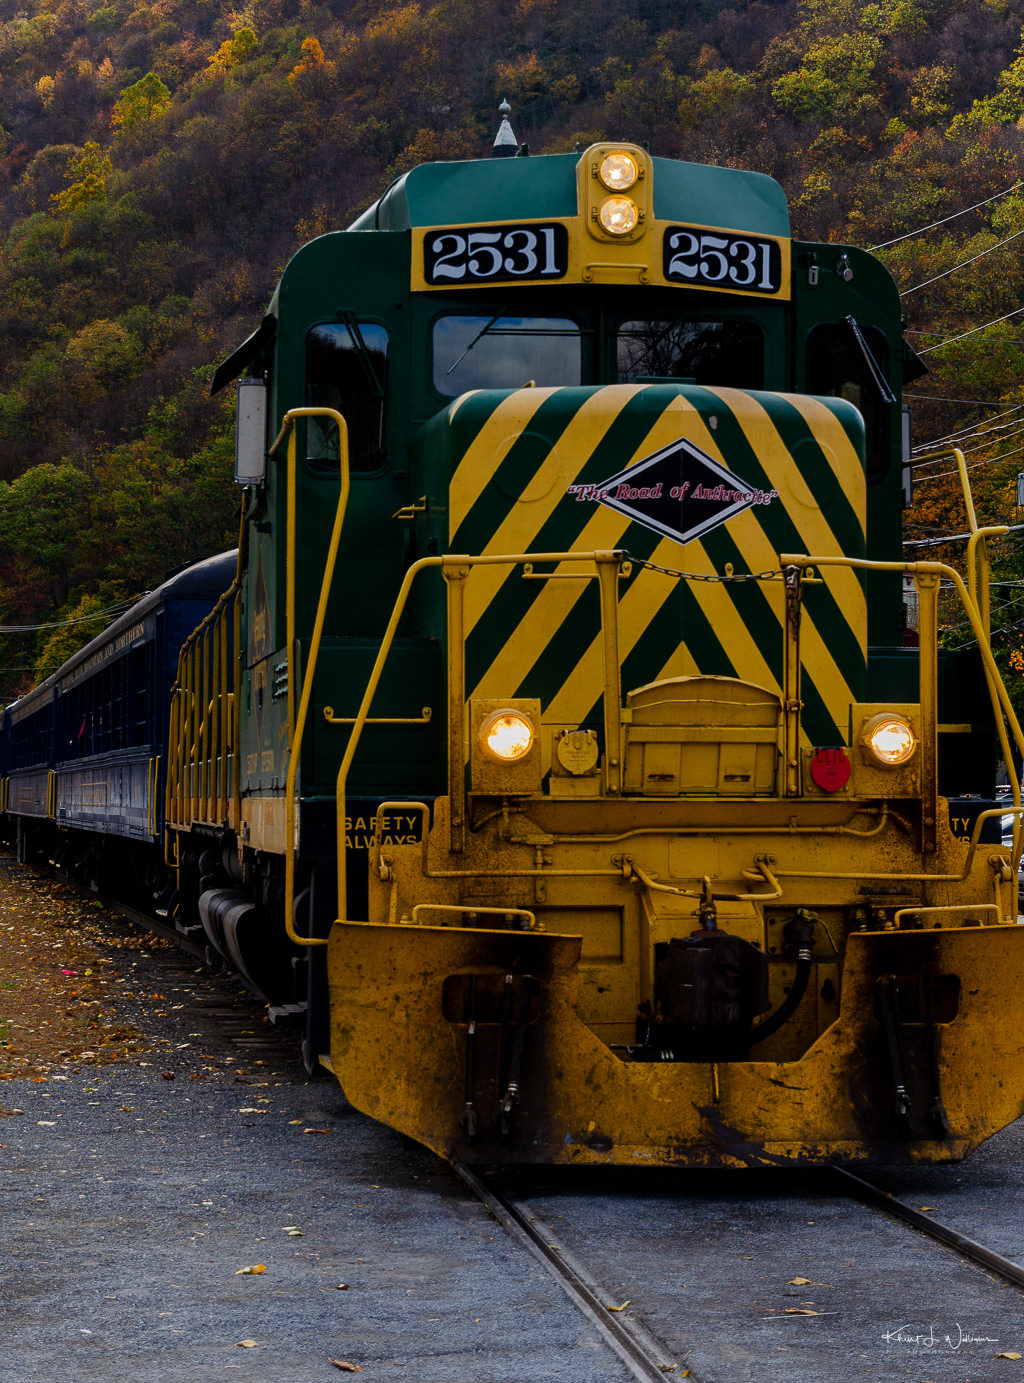 Autumn Leaf Excursion to Jim Thorpe on the Lehigh Gorge Scenic Railway